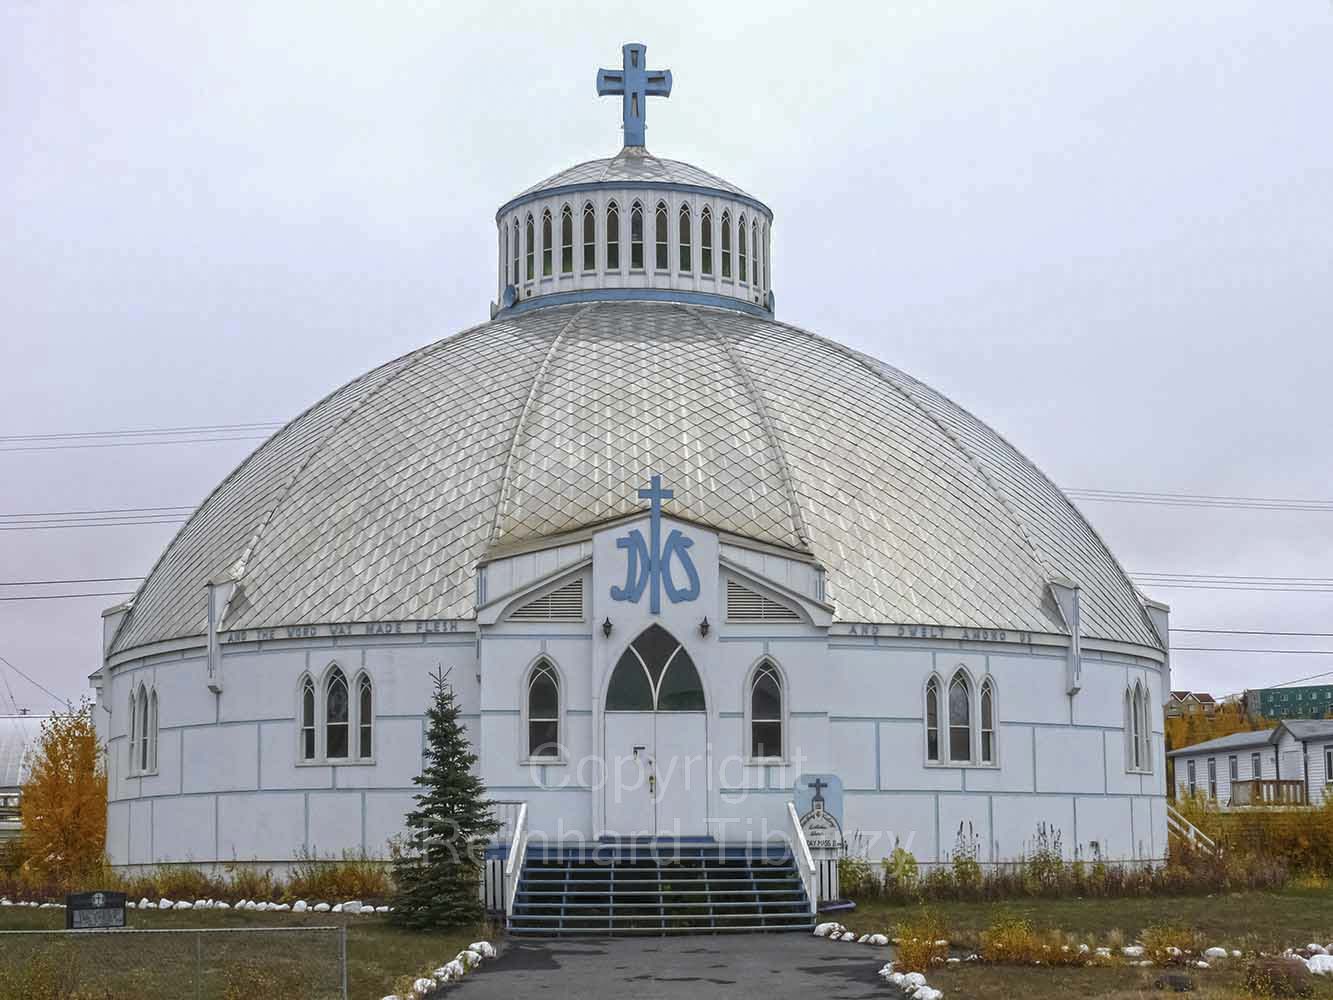 Igloo church, Our Lady of Victory, Inovik, Northwest Territories, Canada